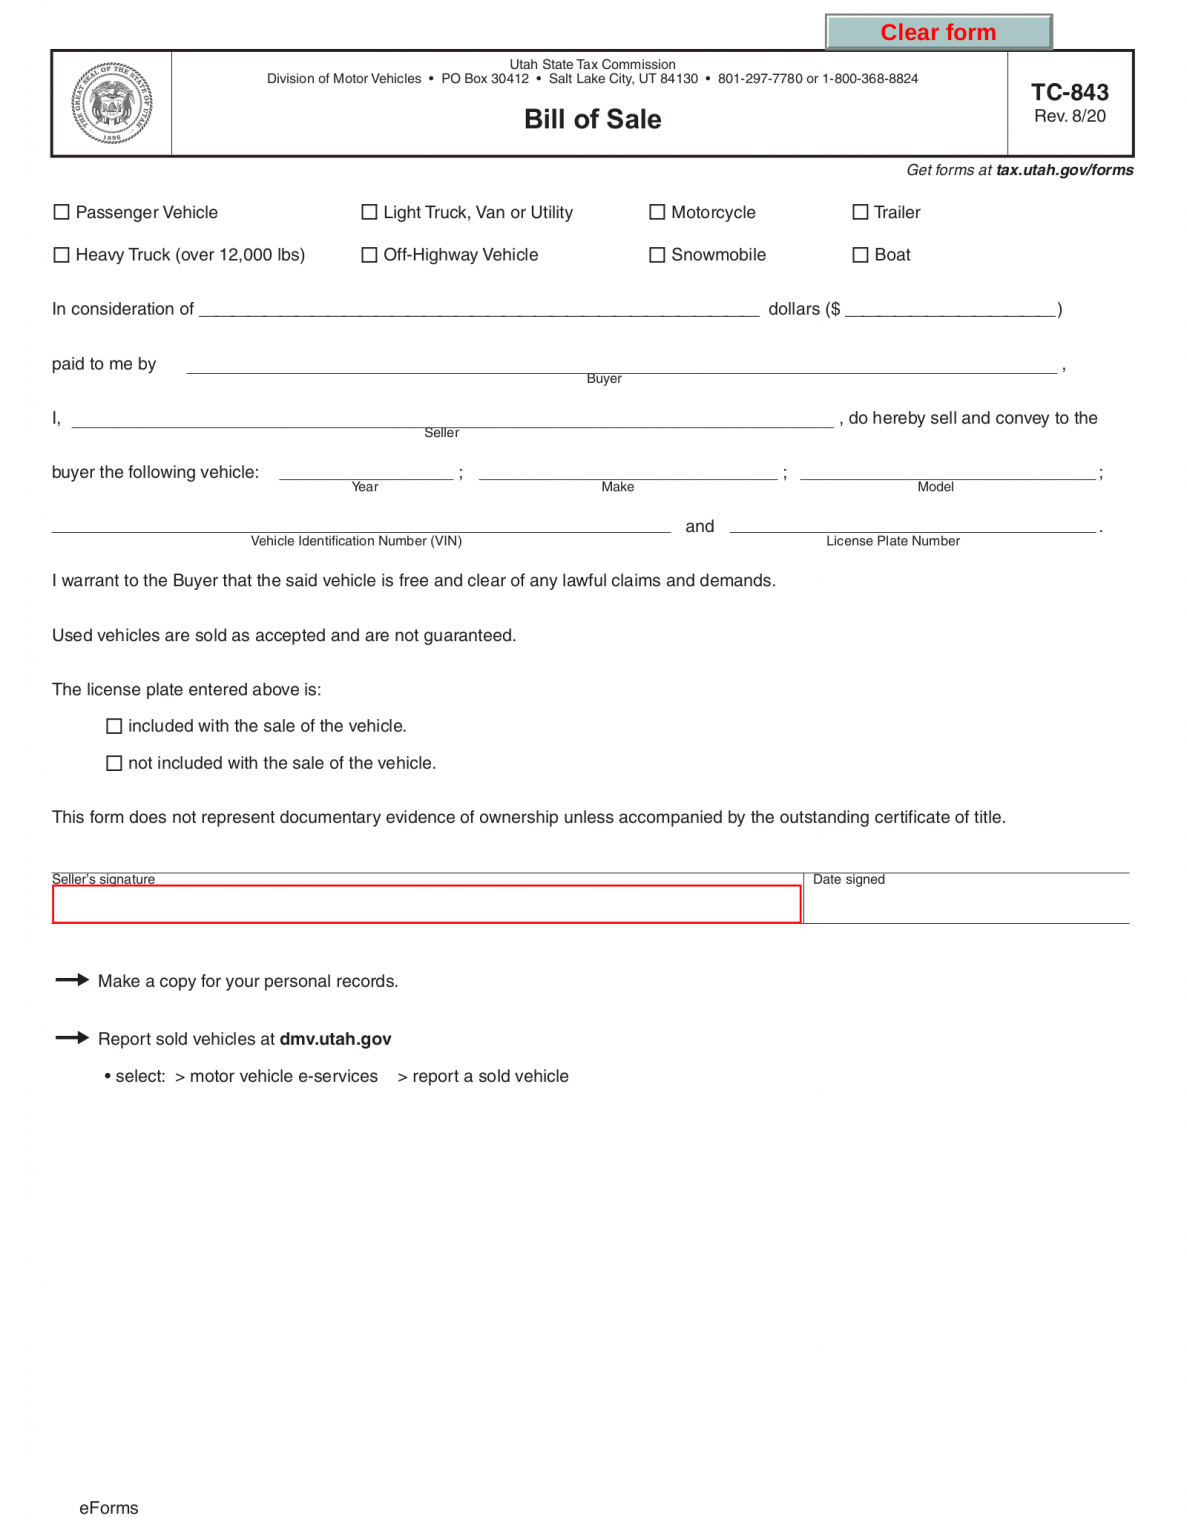 free-utah-bill-of-sale-forms-pdf-eforms-hi-tech